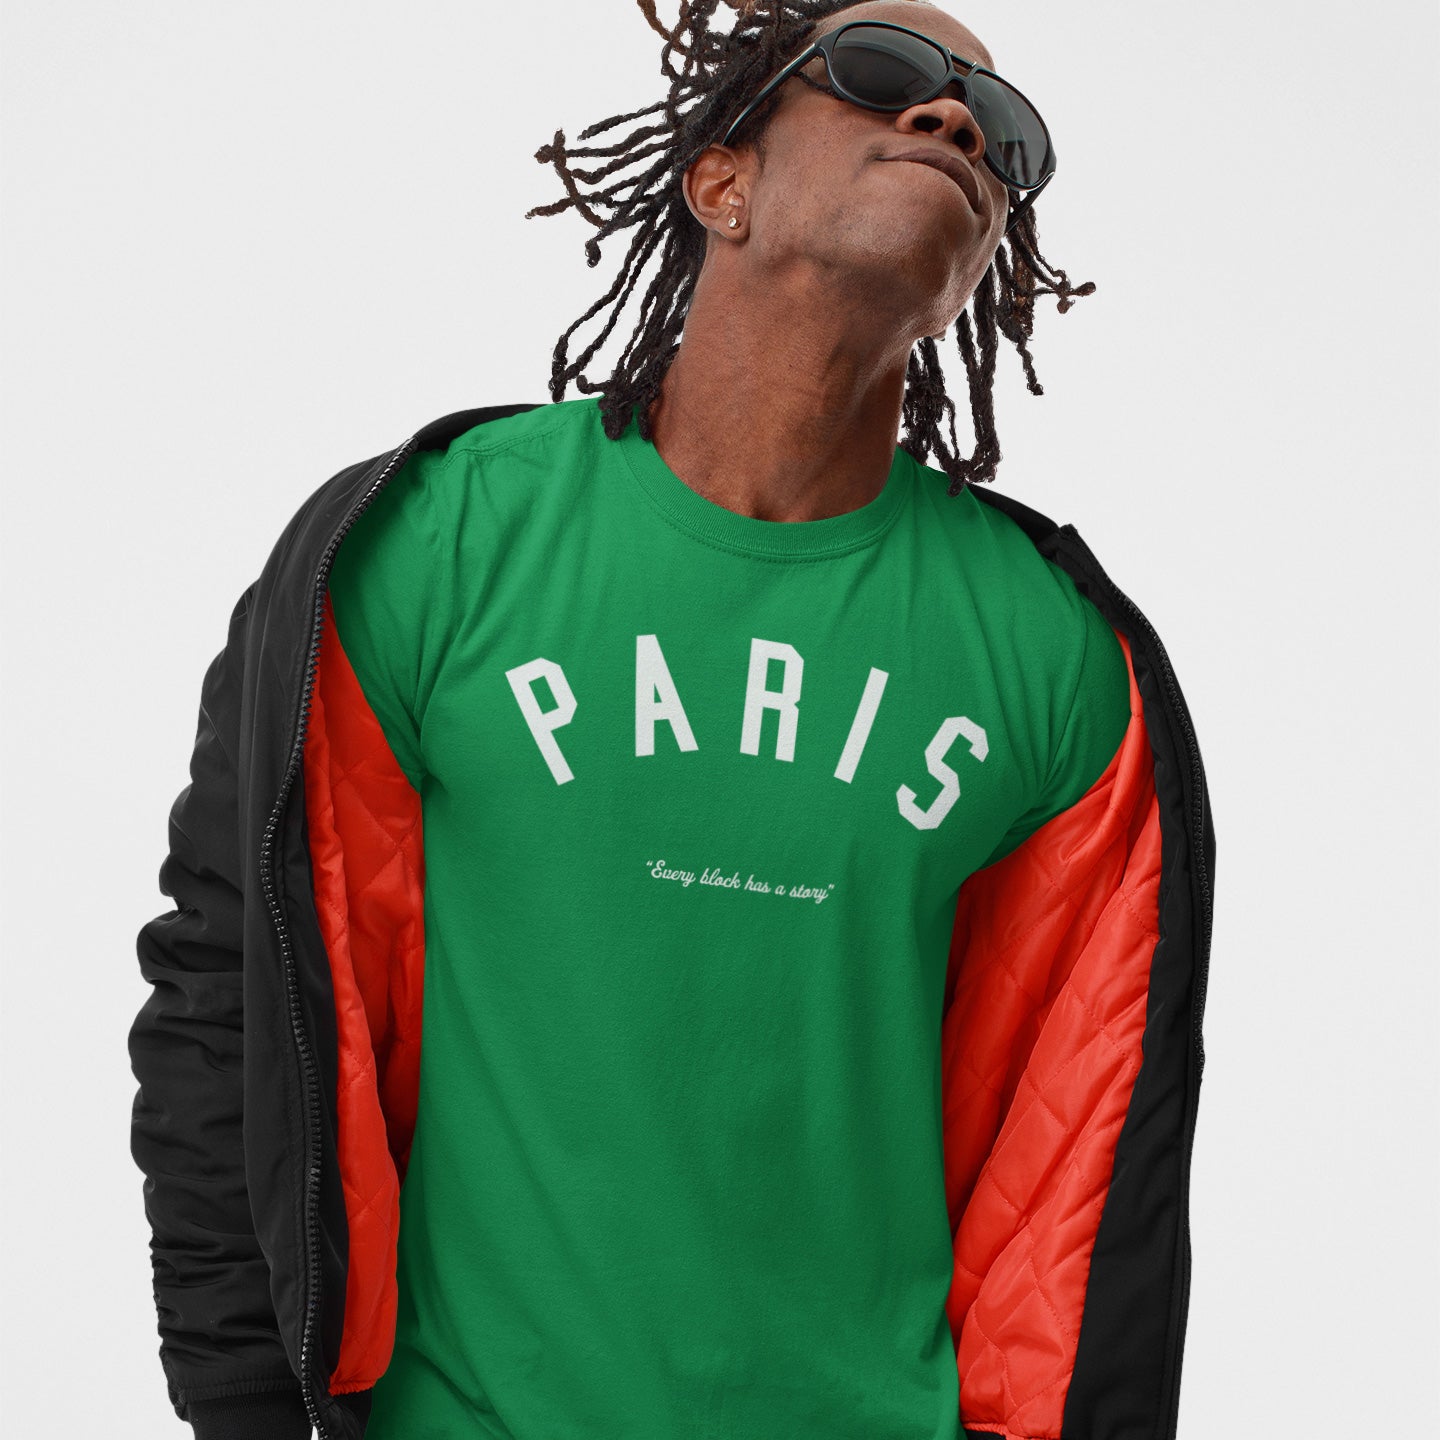 Paris Story T-shirt